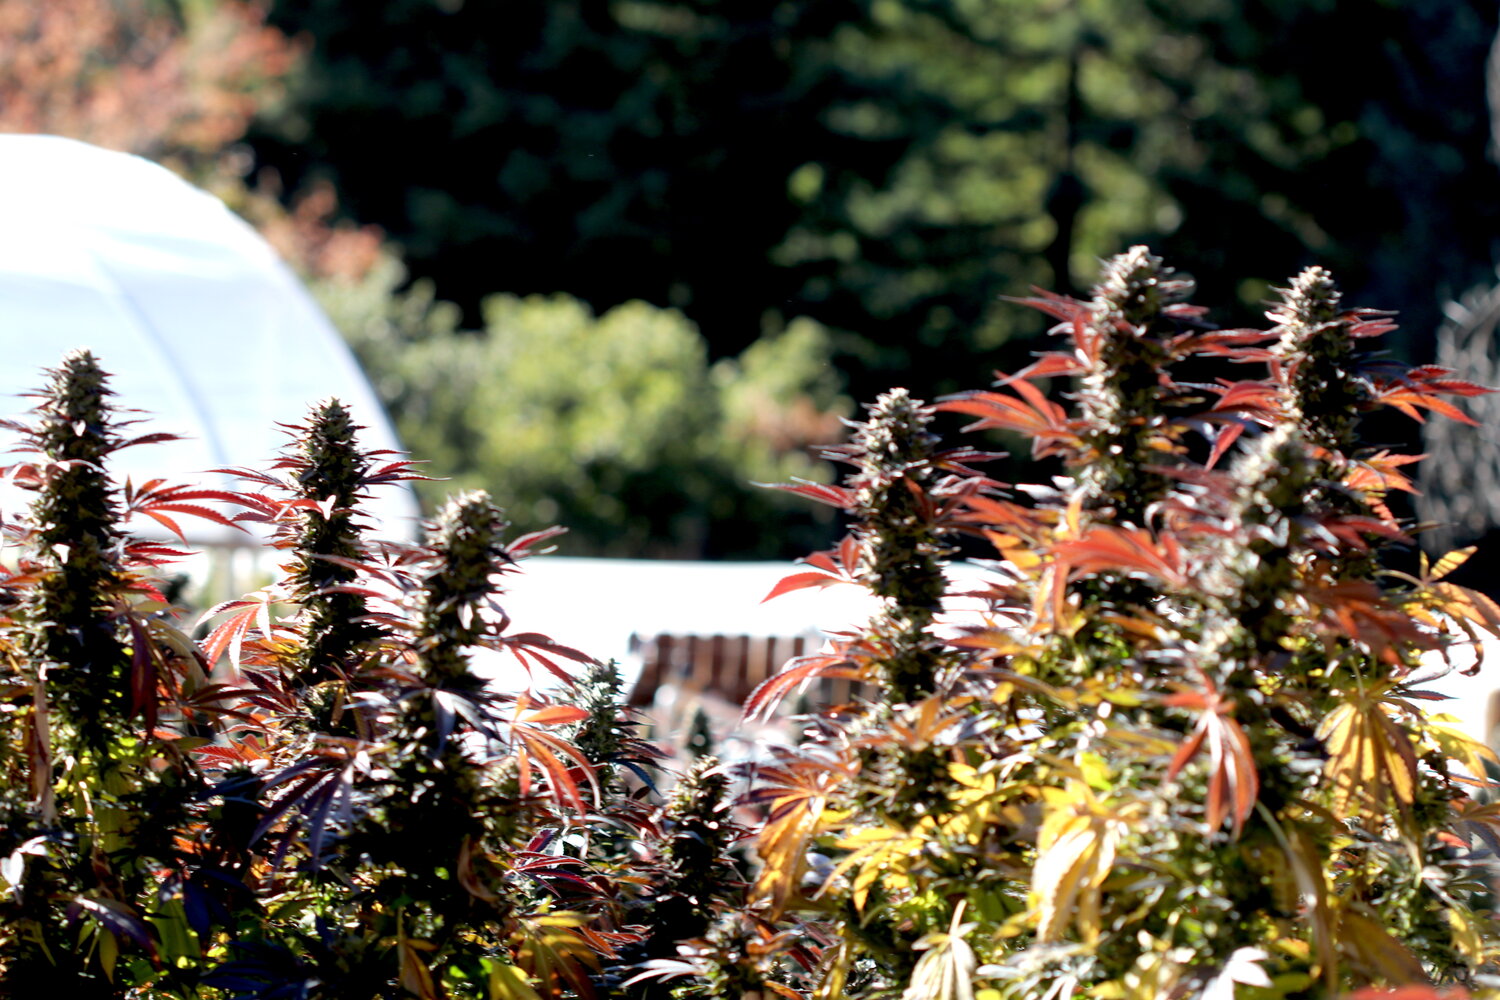 Harvesting Craft Cannabis